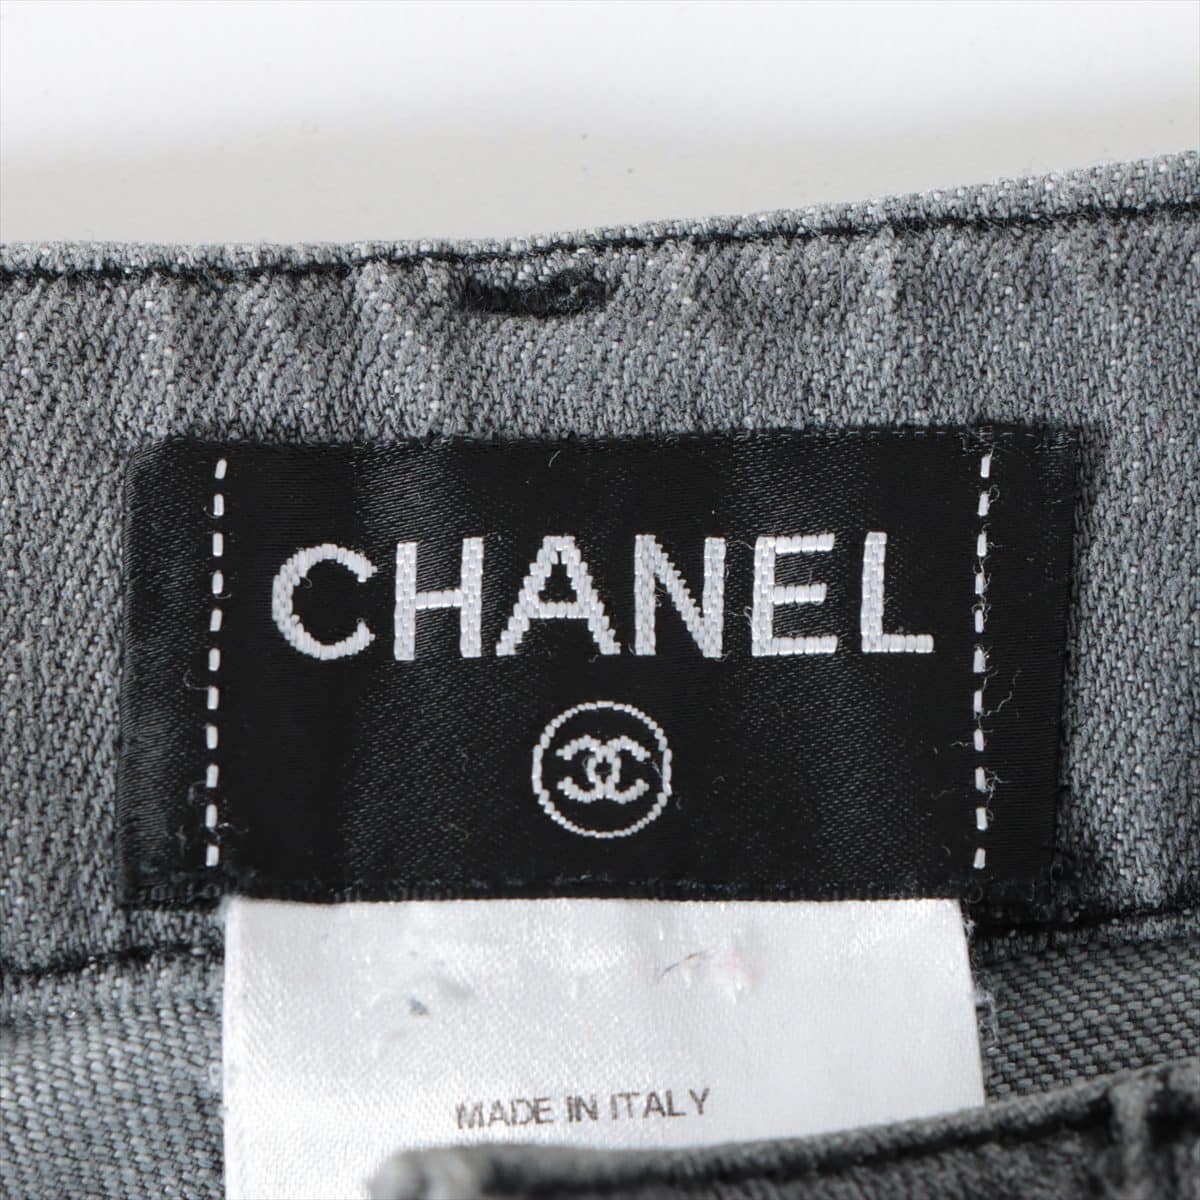 Chanel Coco Mark Matelasse P38 Cotton Denim pants 36 Ladies' Grey